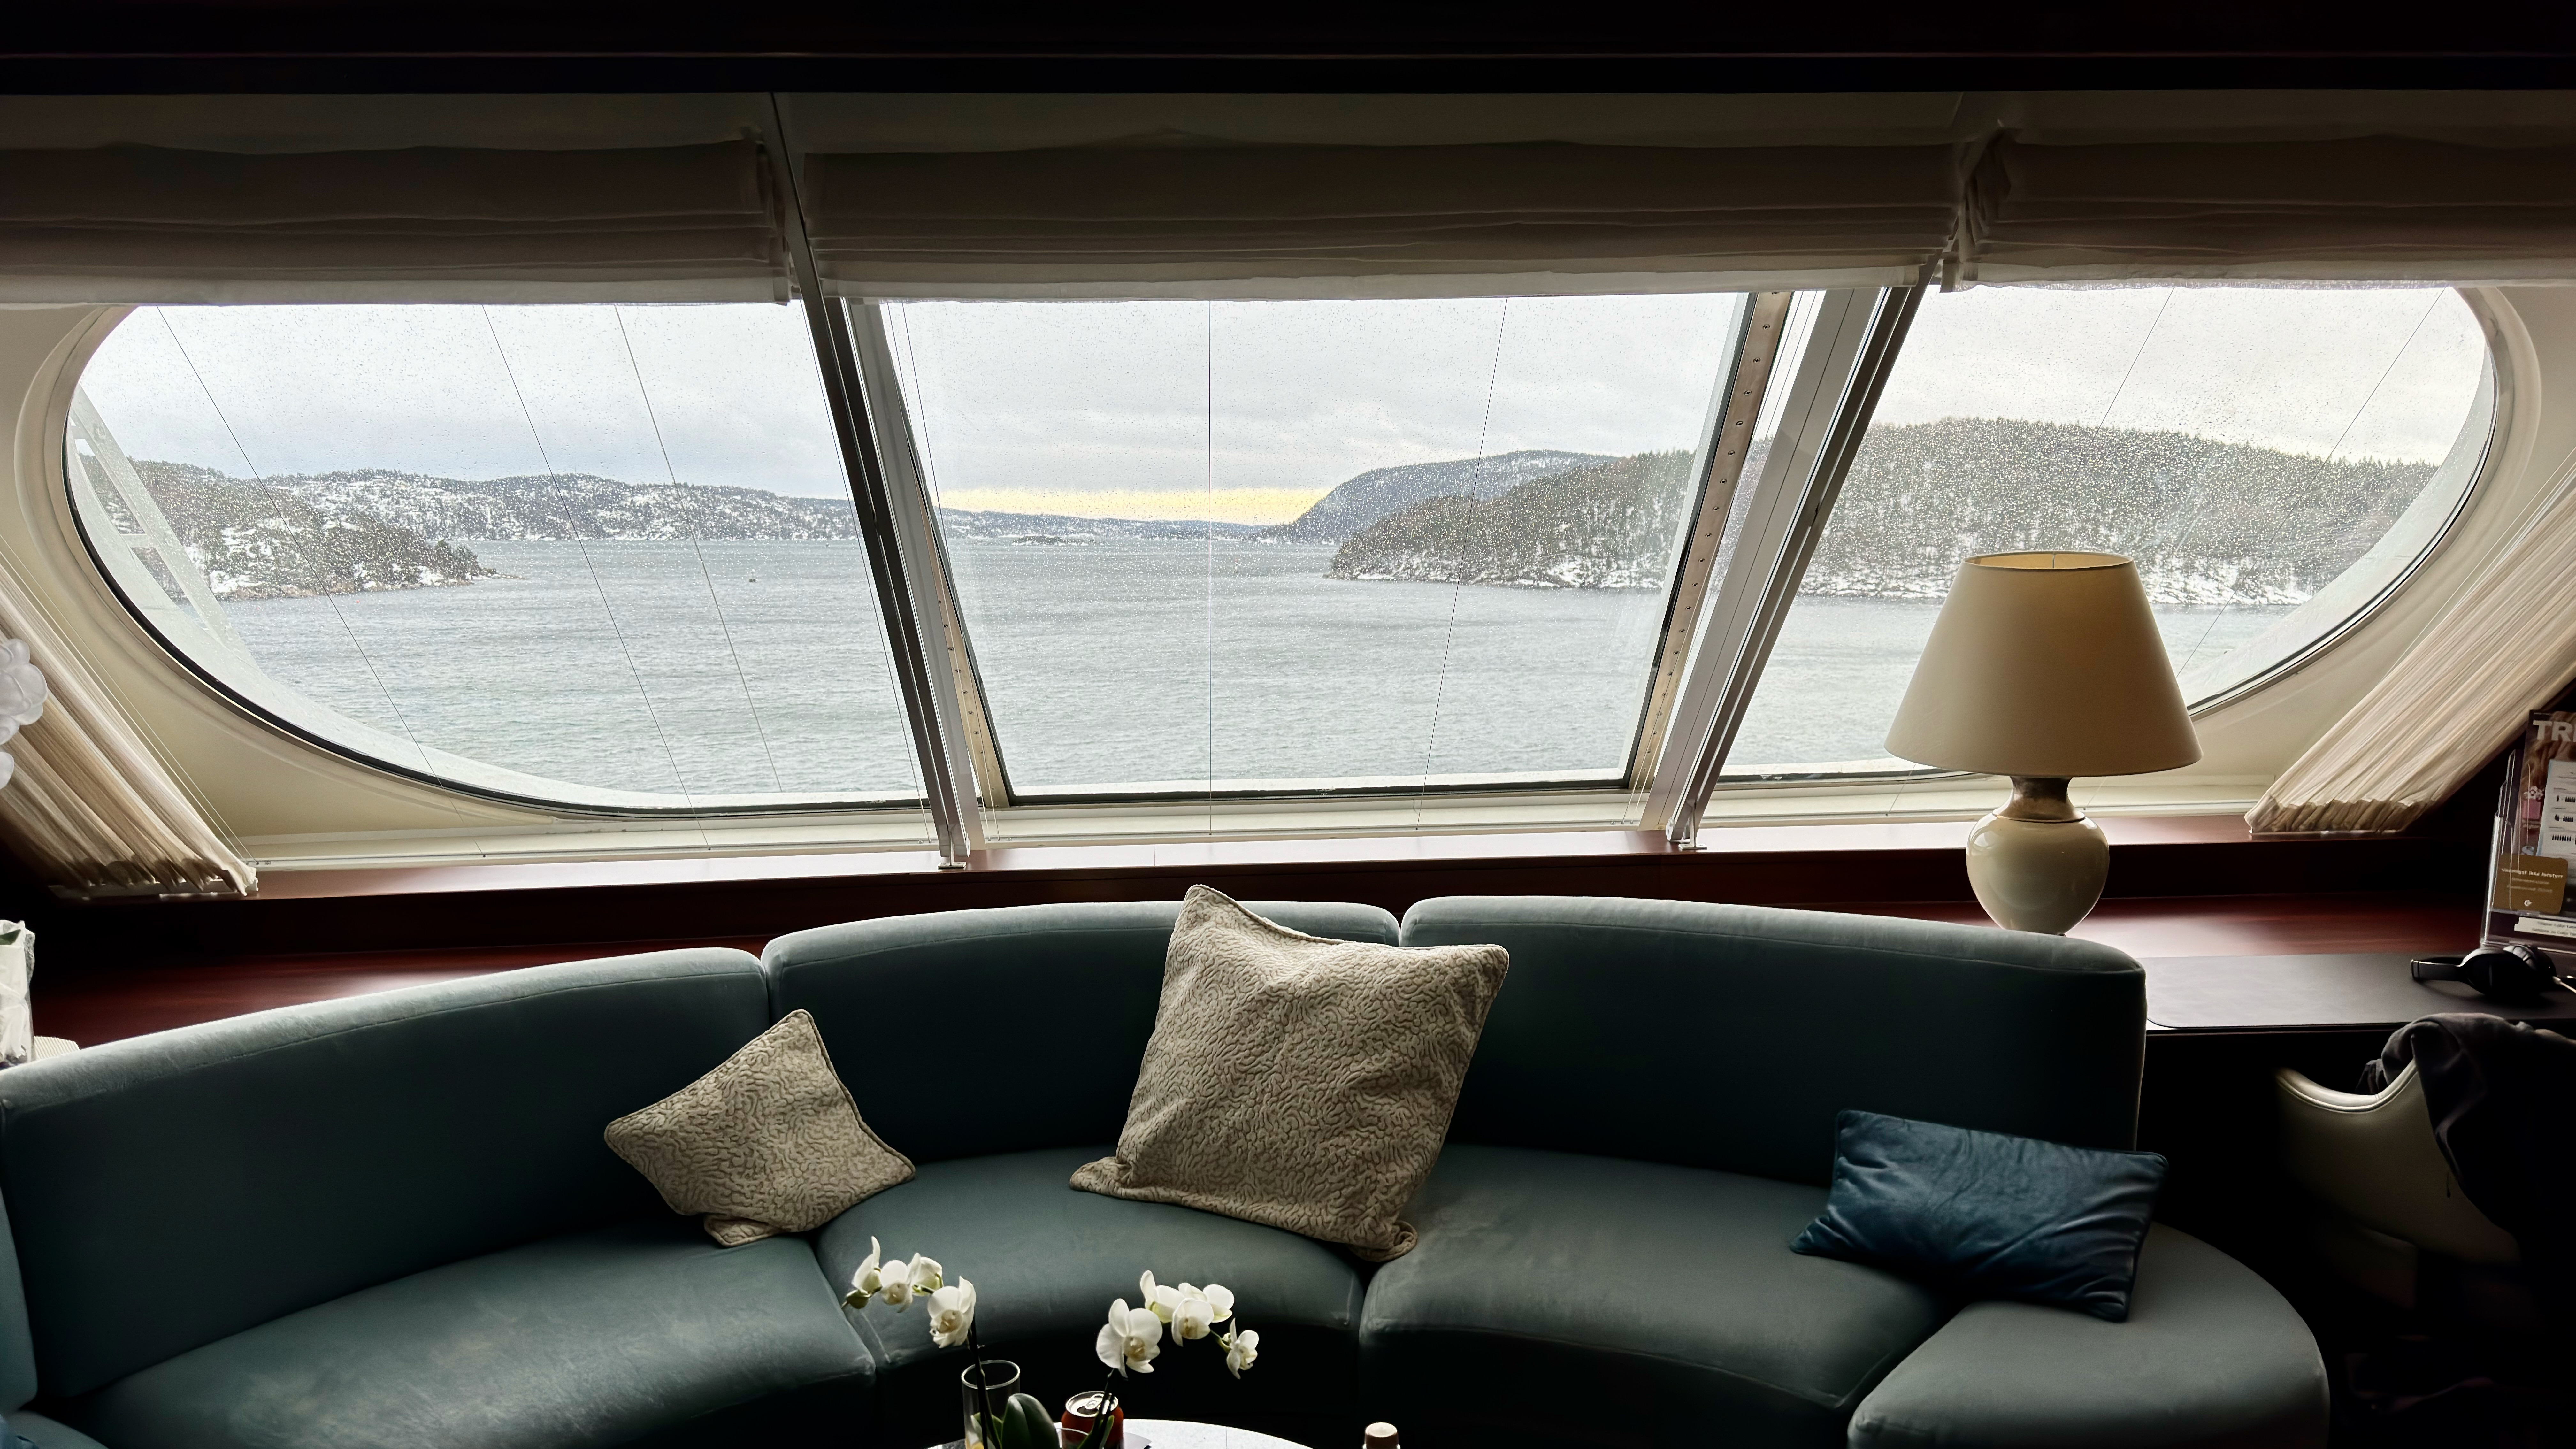 Porsche Taycan Taycan to Lofoten Islands, Norway (Follow Our Trip Report) 53547201718_dac22c6094_o